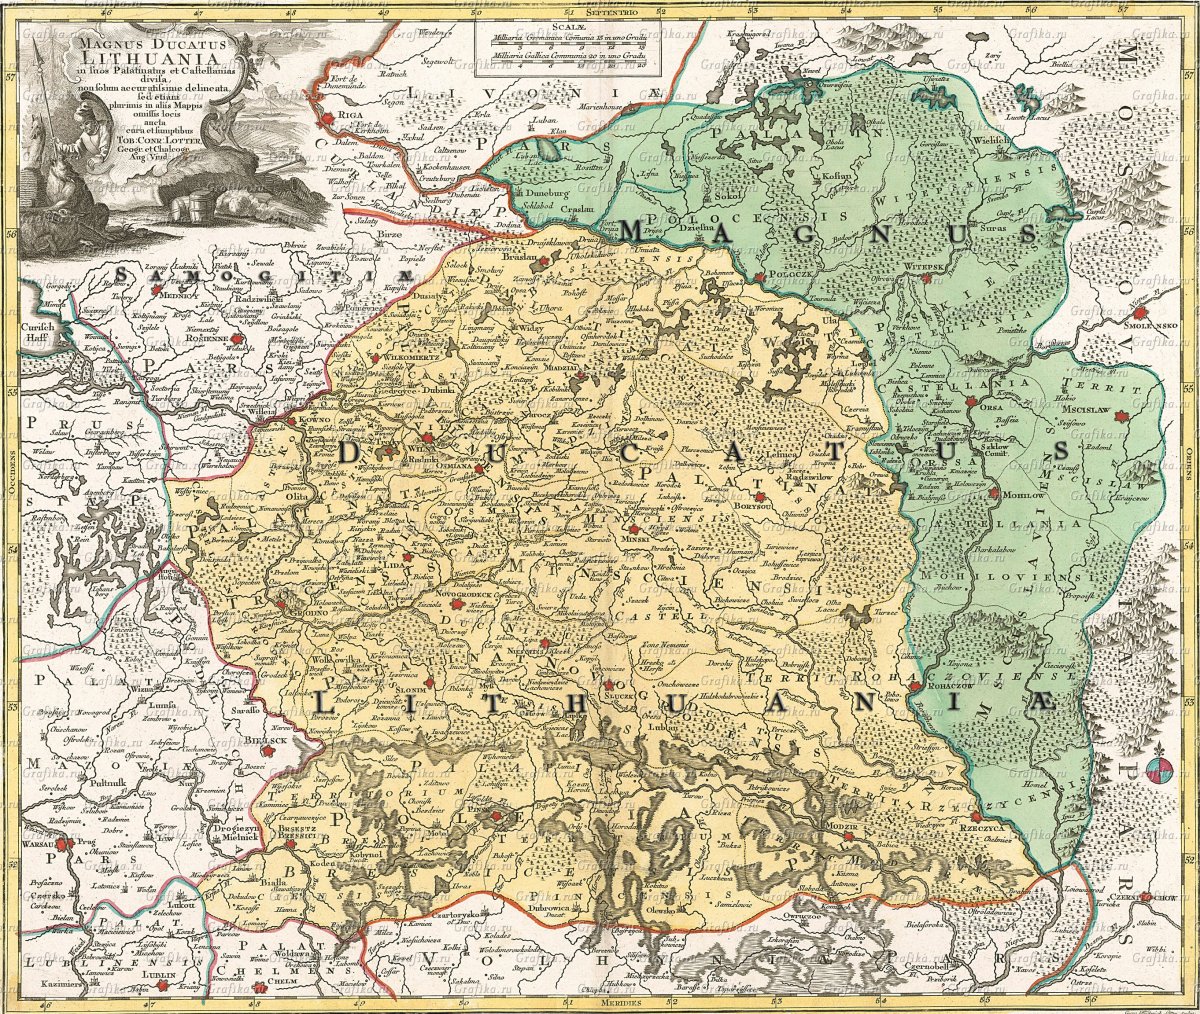 Magnus_ducatus_Lithuania,_1780.jpg